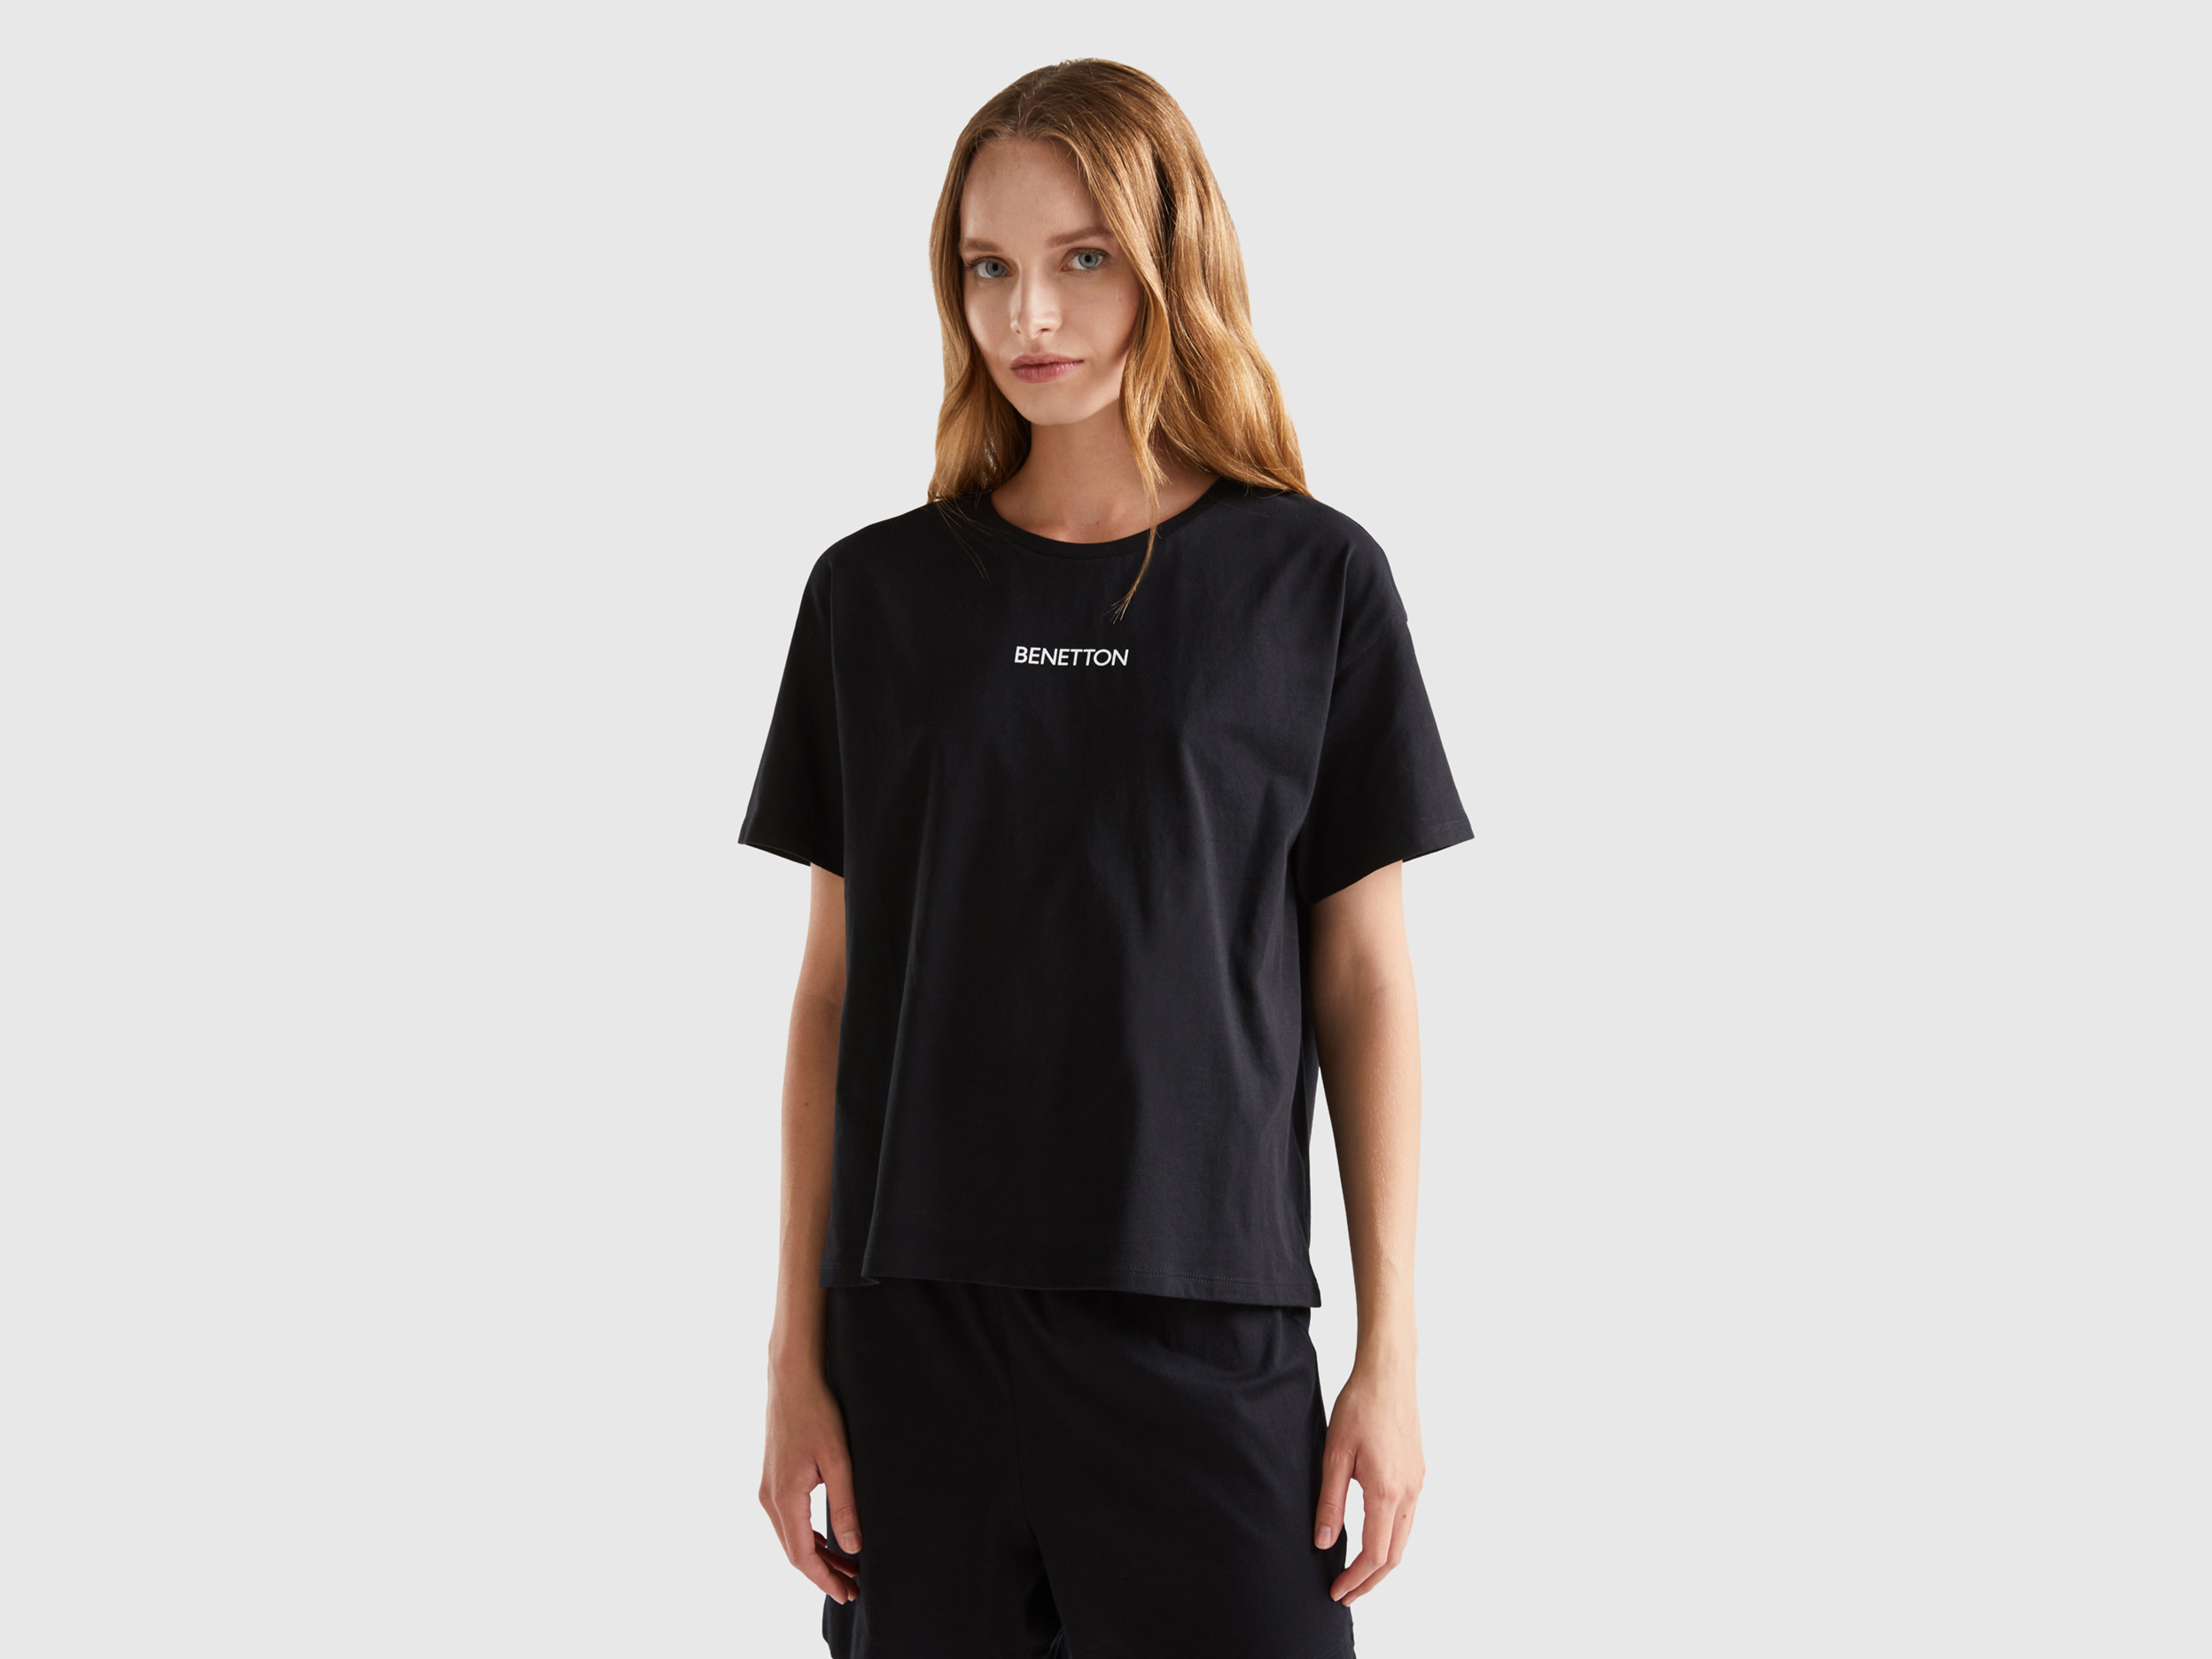 Benetton, 100% Cotton T-shirt, size L, Black, Women